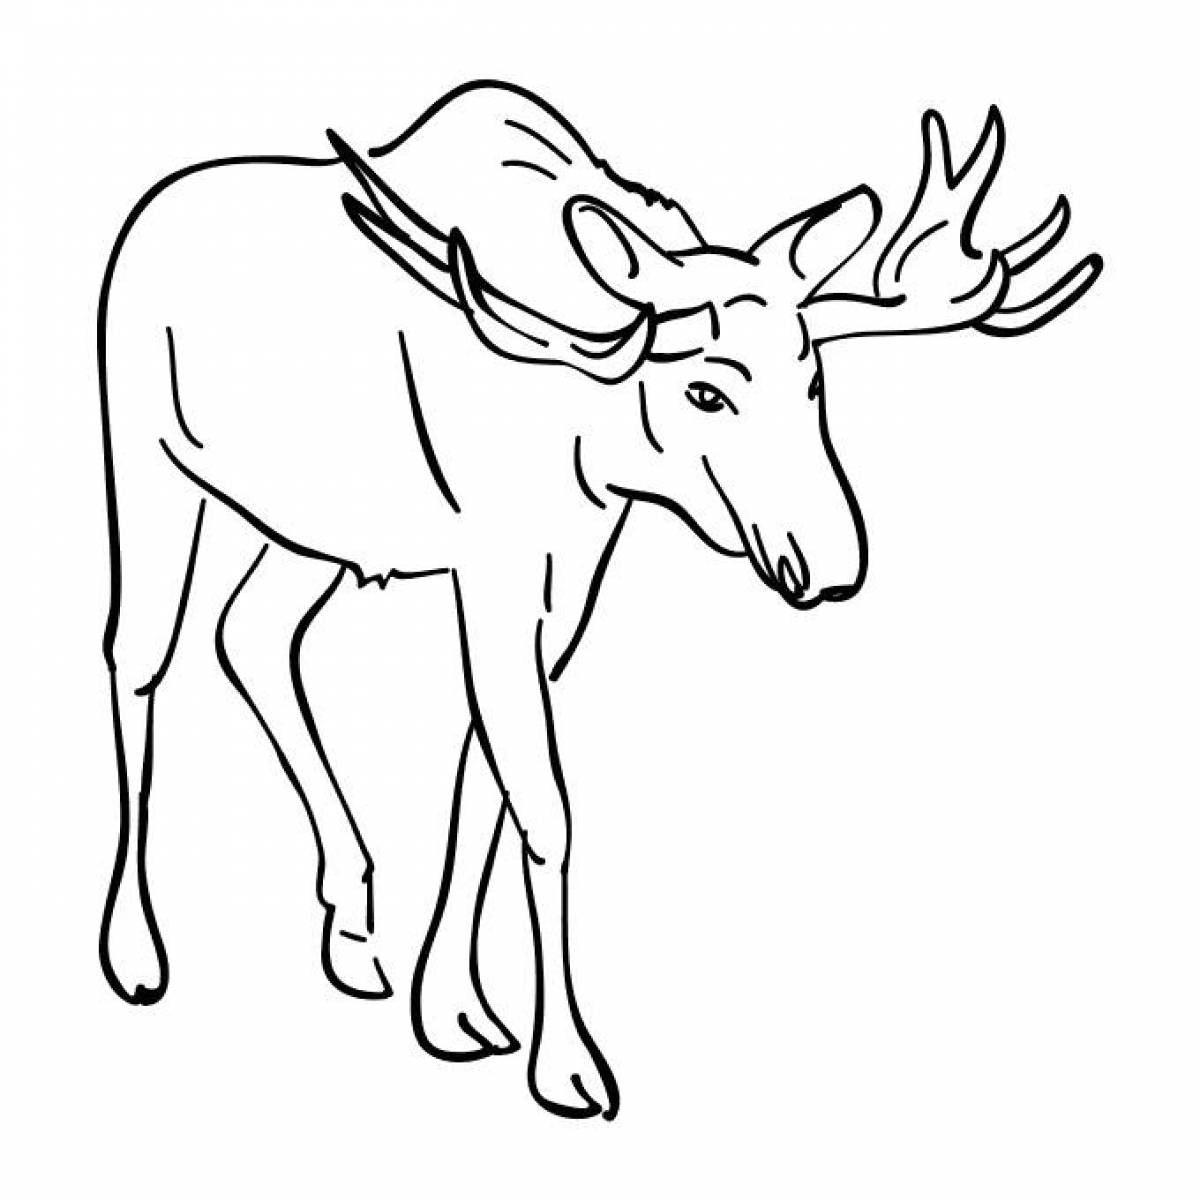 Coloring book shining elk for kids